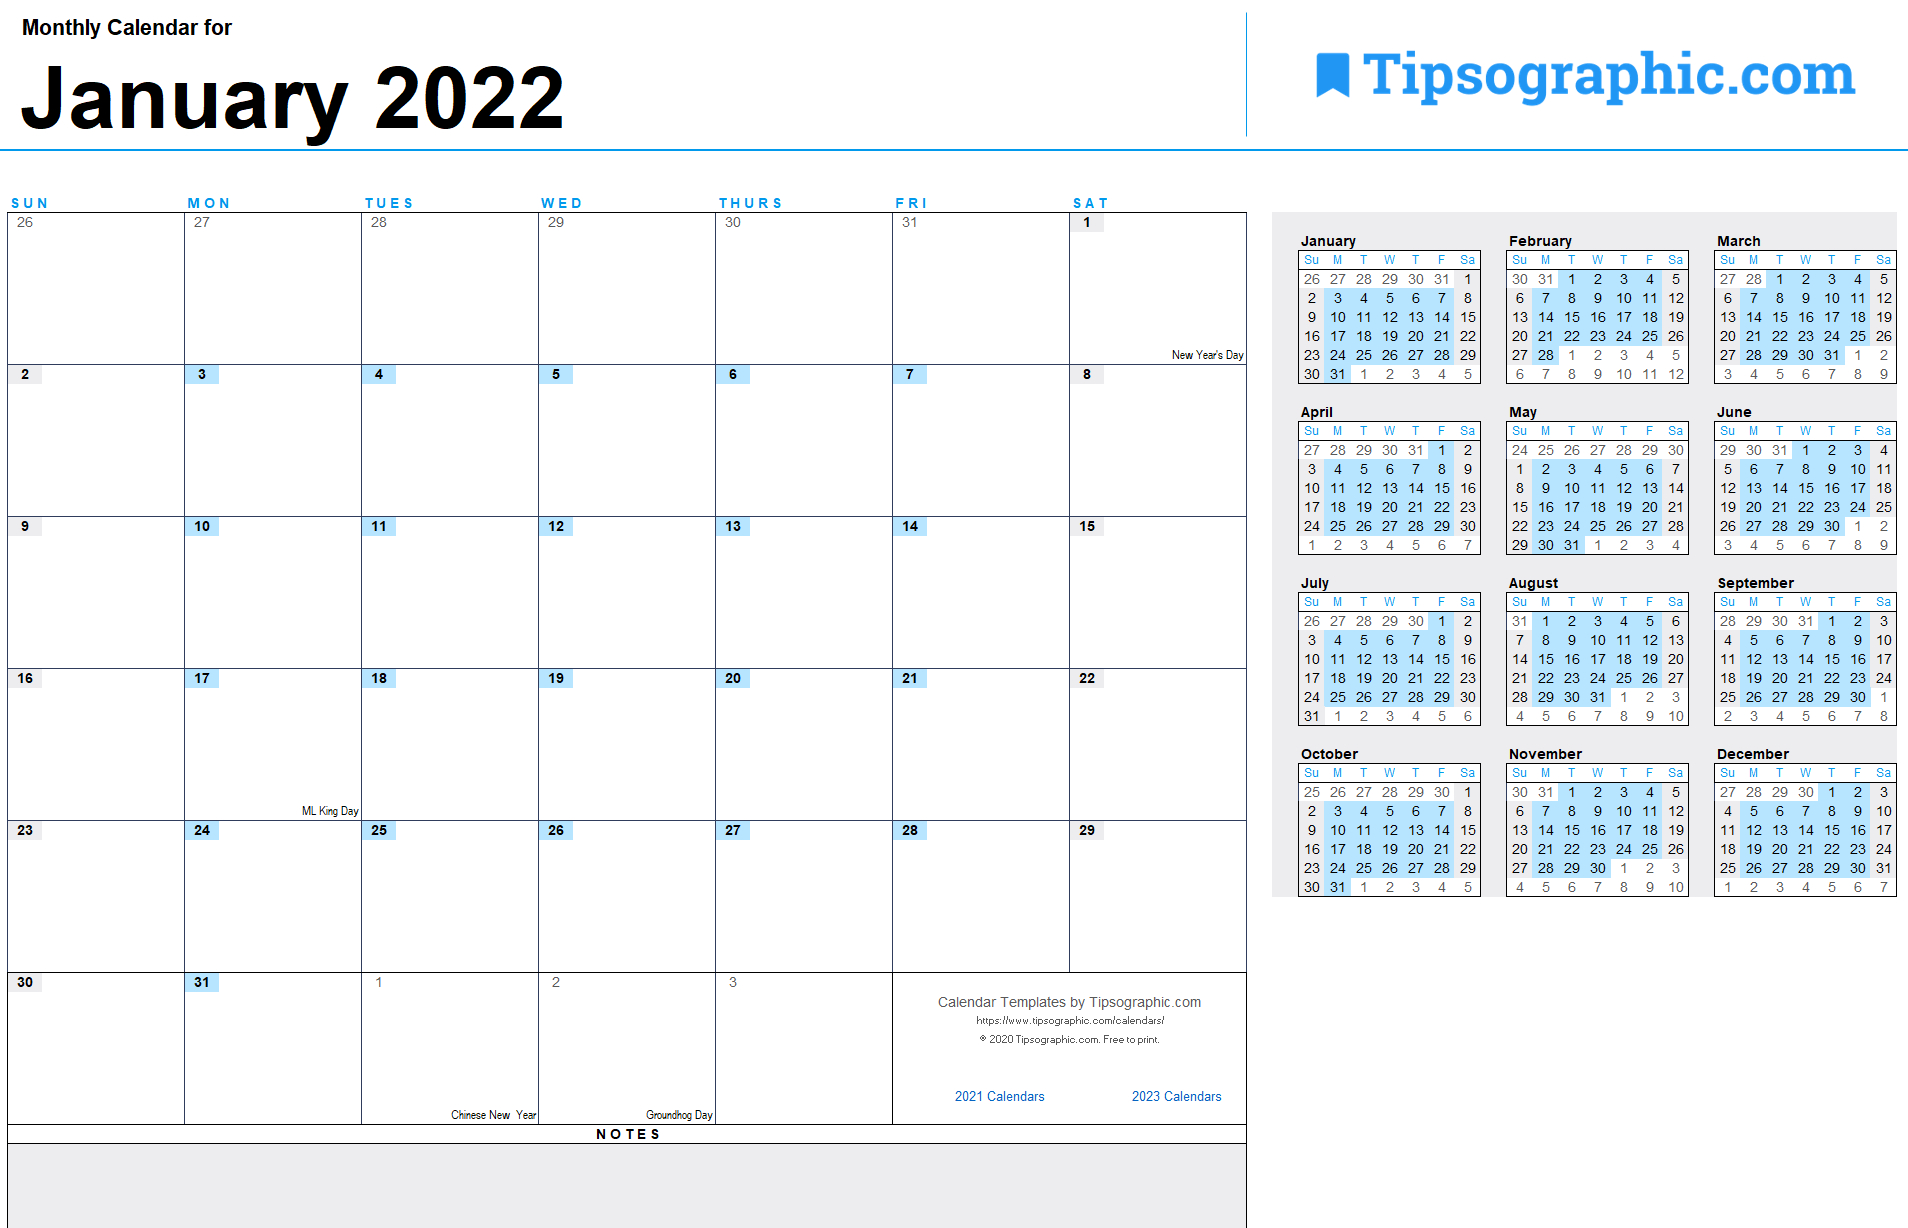 2022 Calendar Templates &amp; Images | Tipsographic  Calendar 2022 Online Free